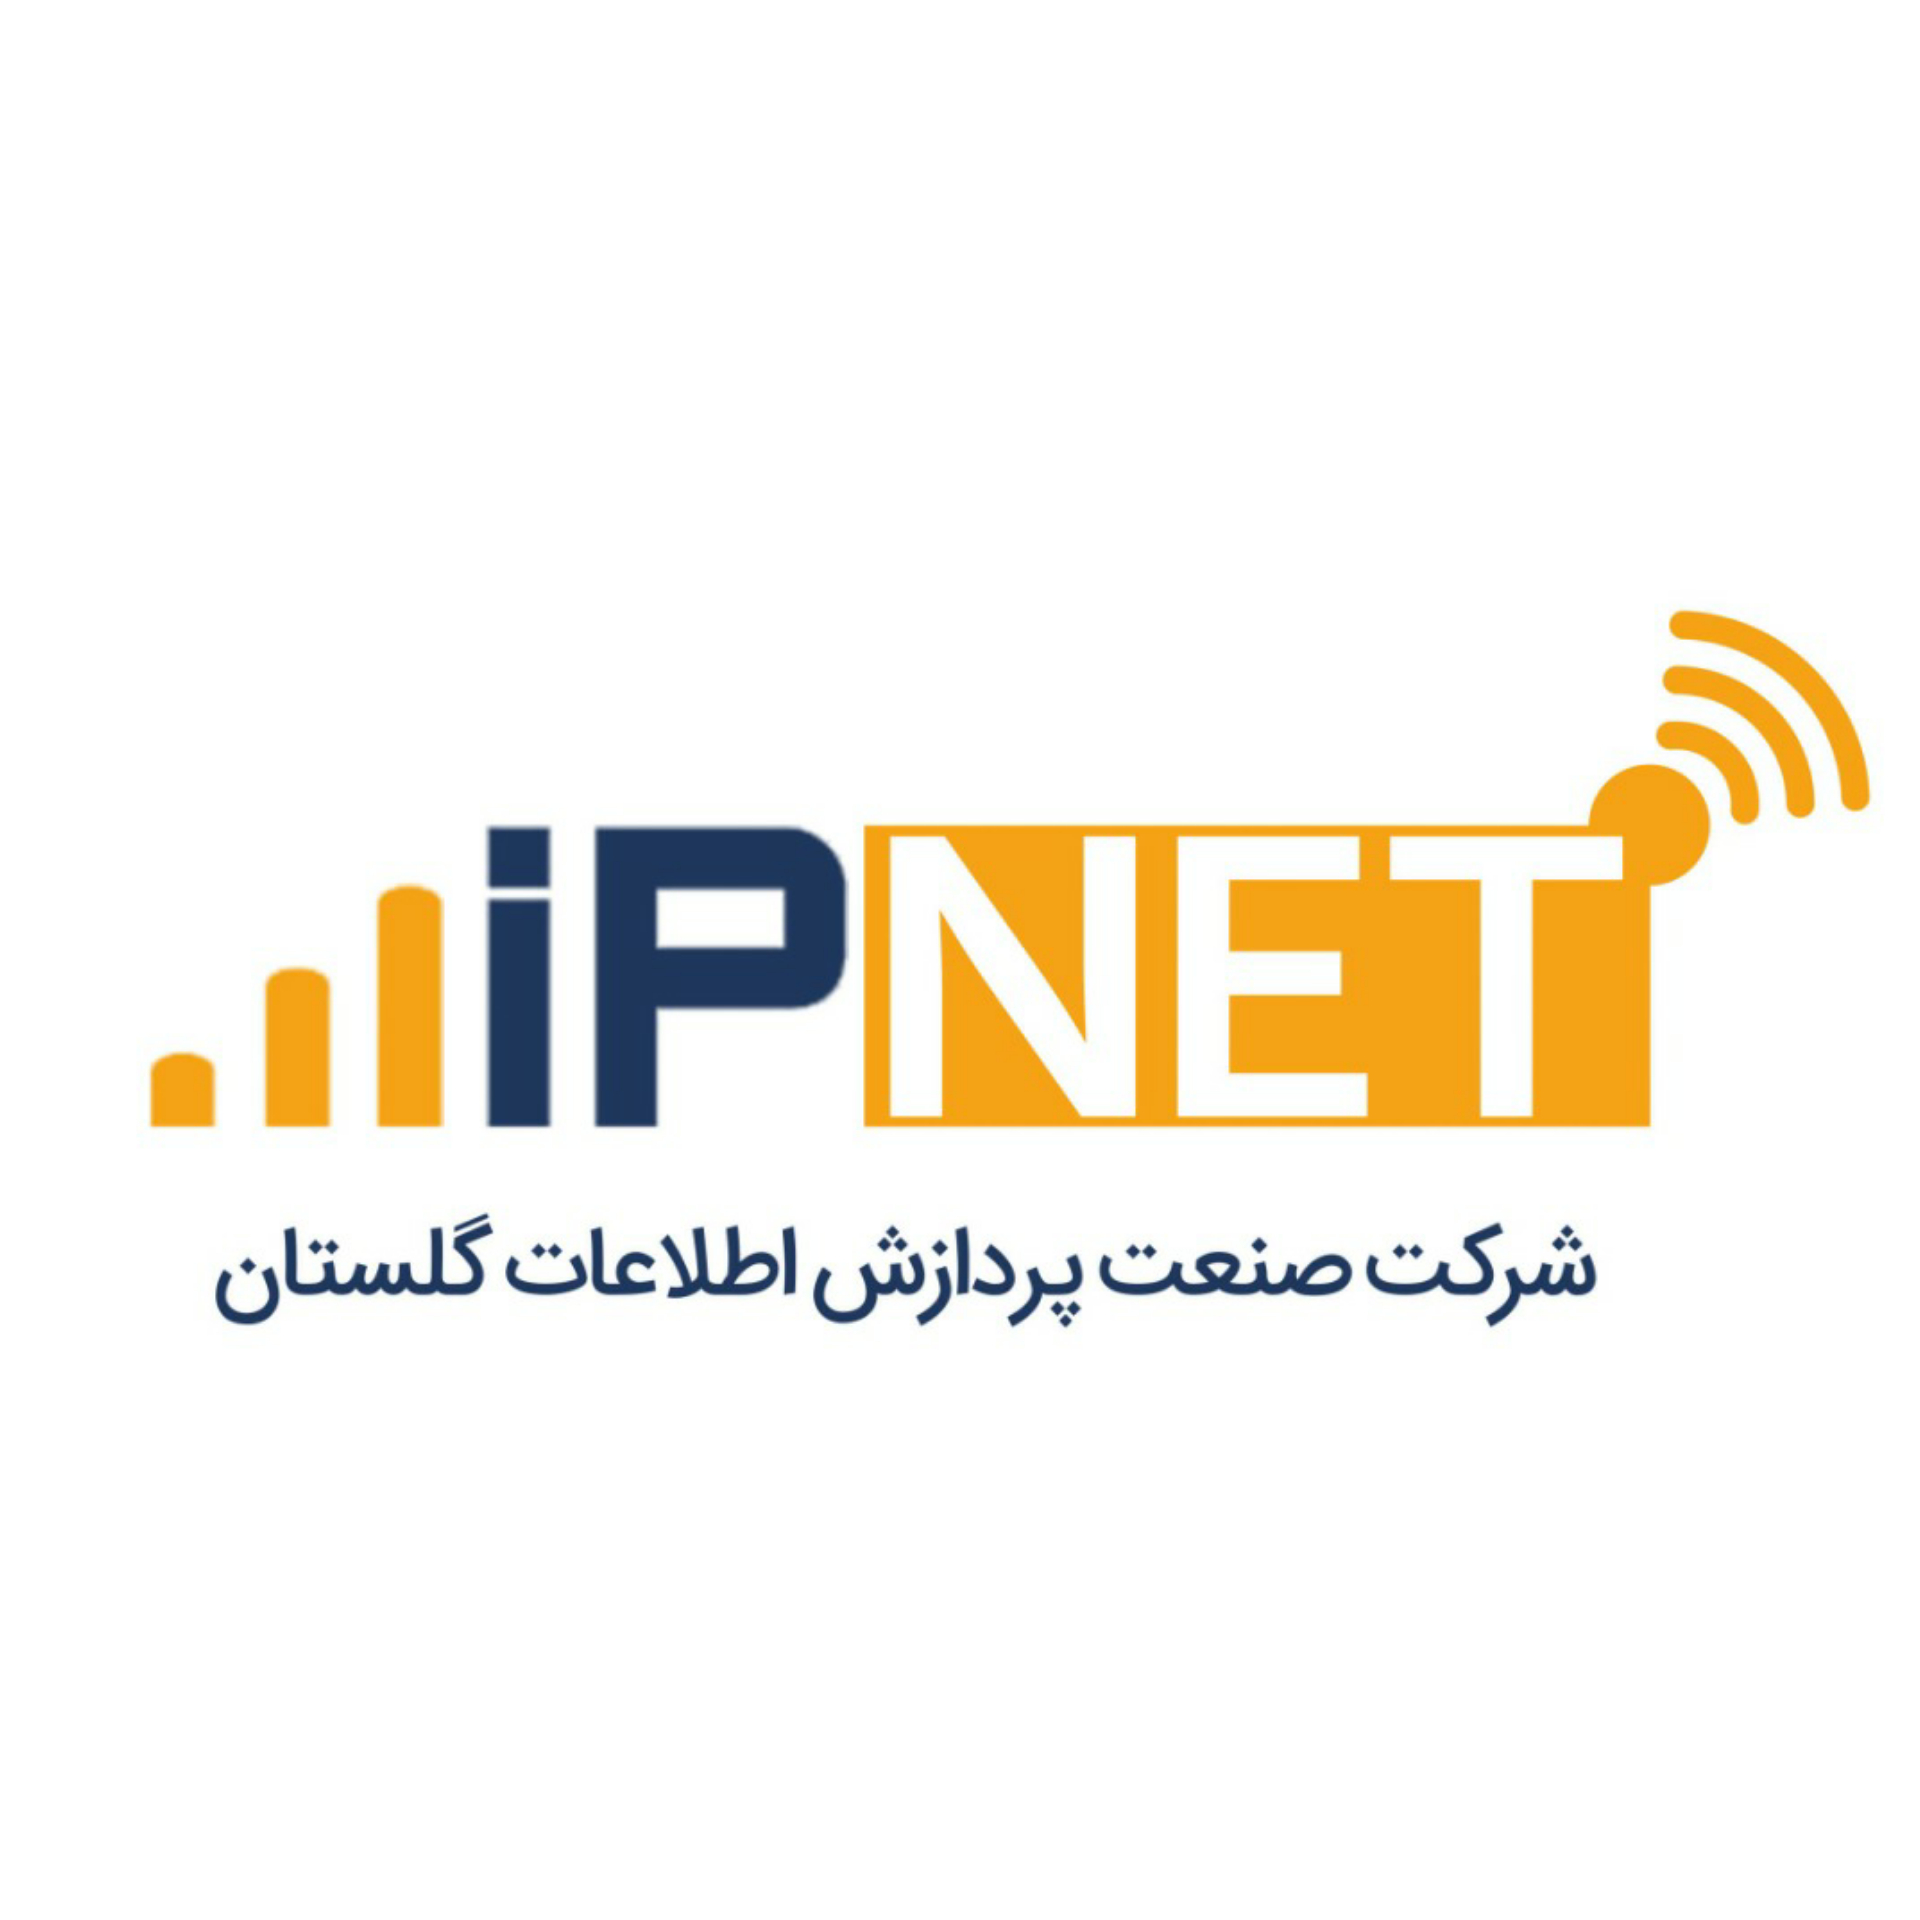 IPnet